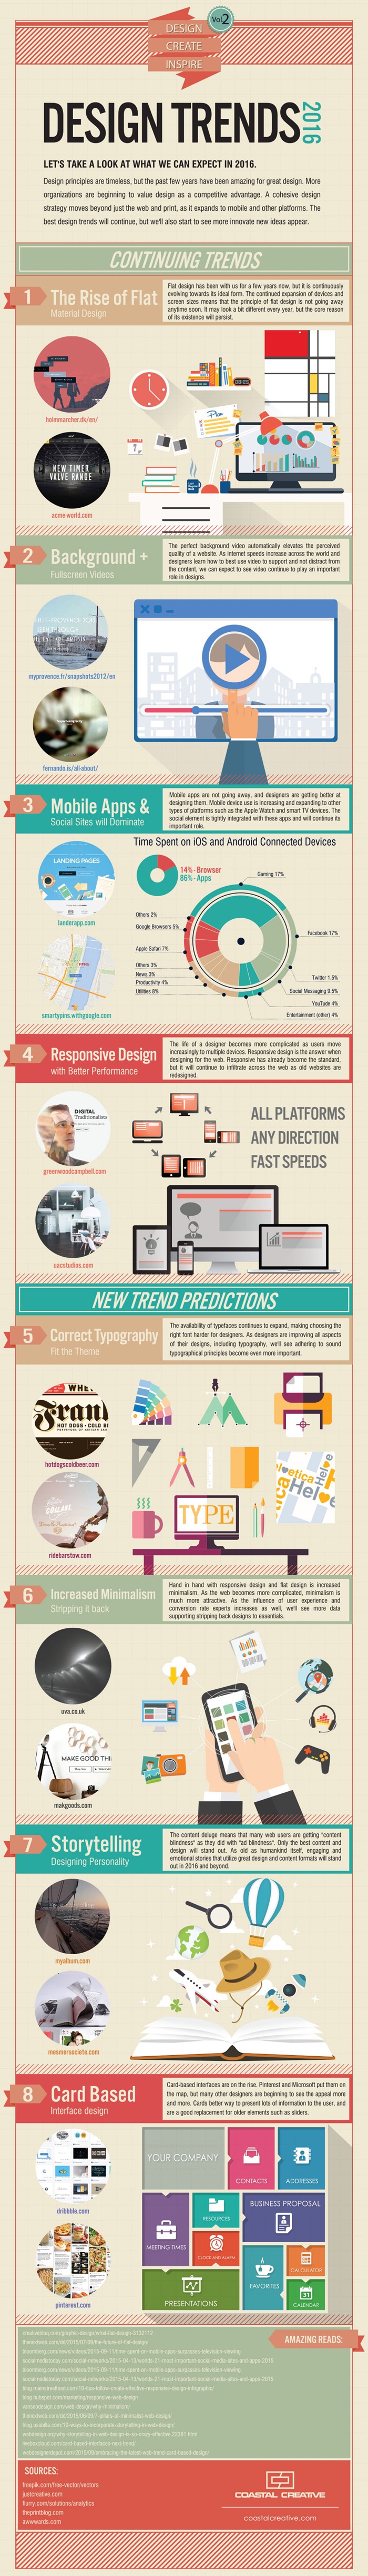 20151215020339-design-trends-infographic